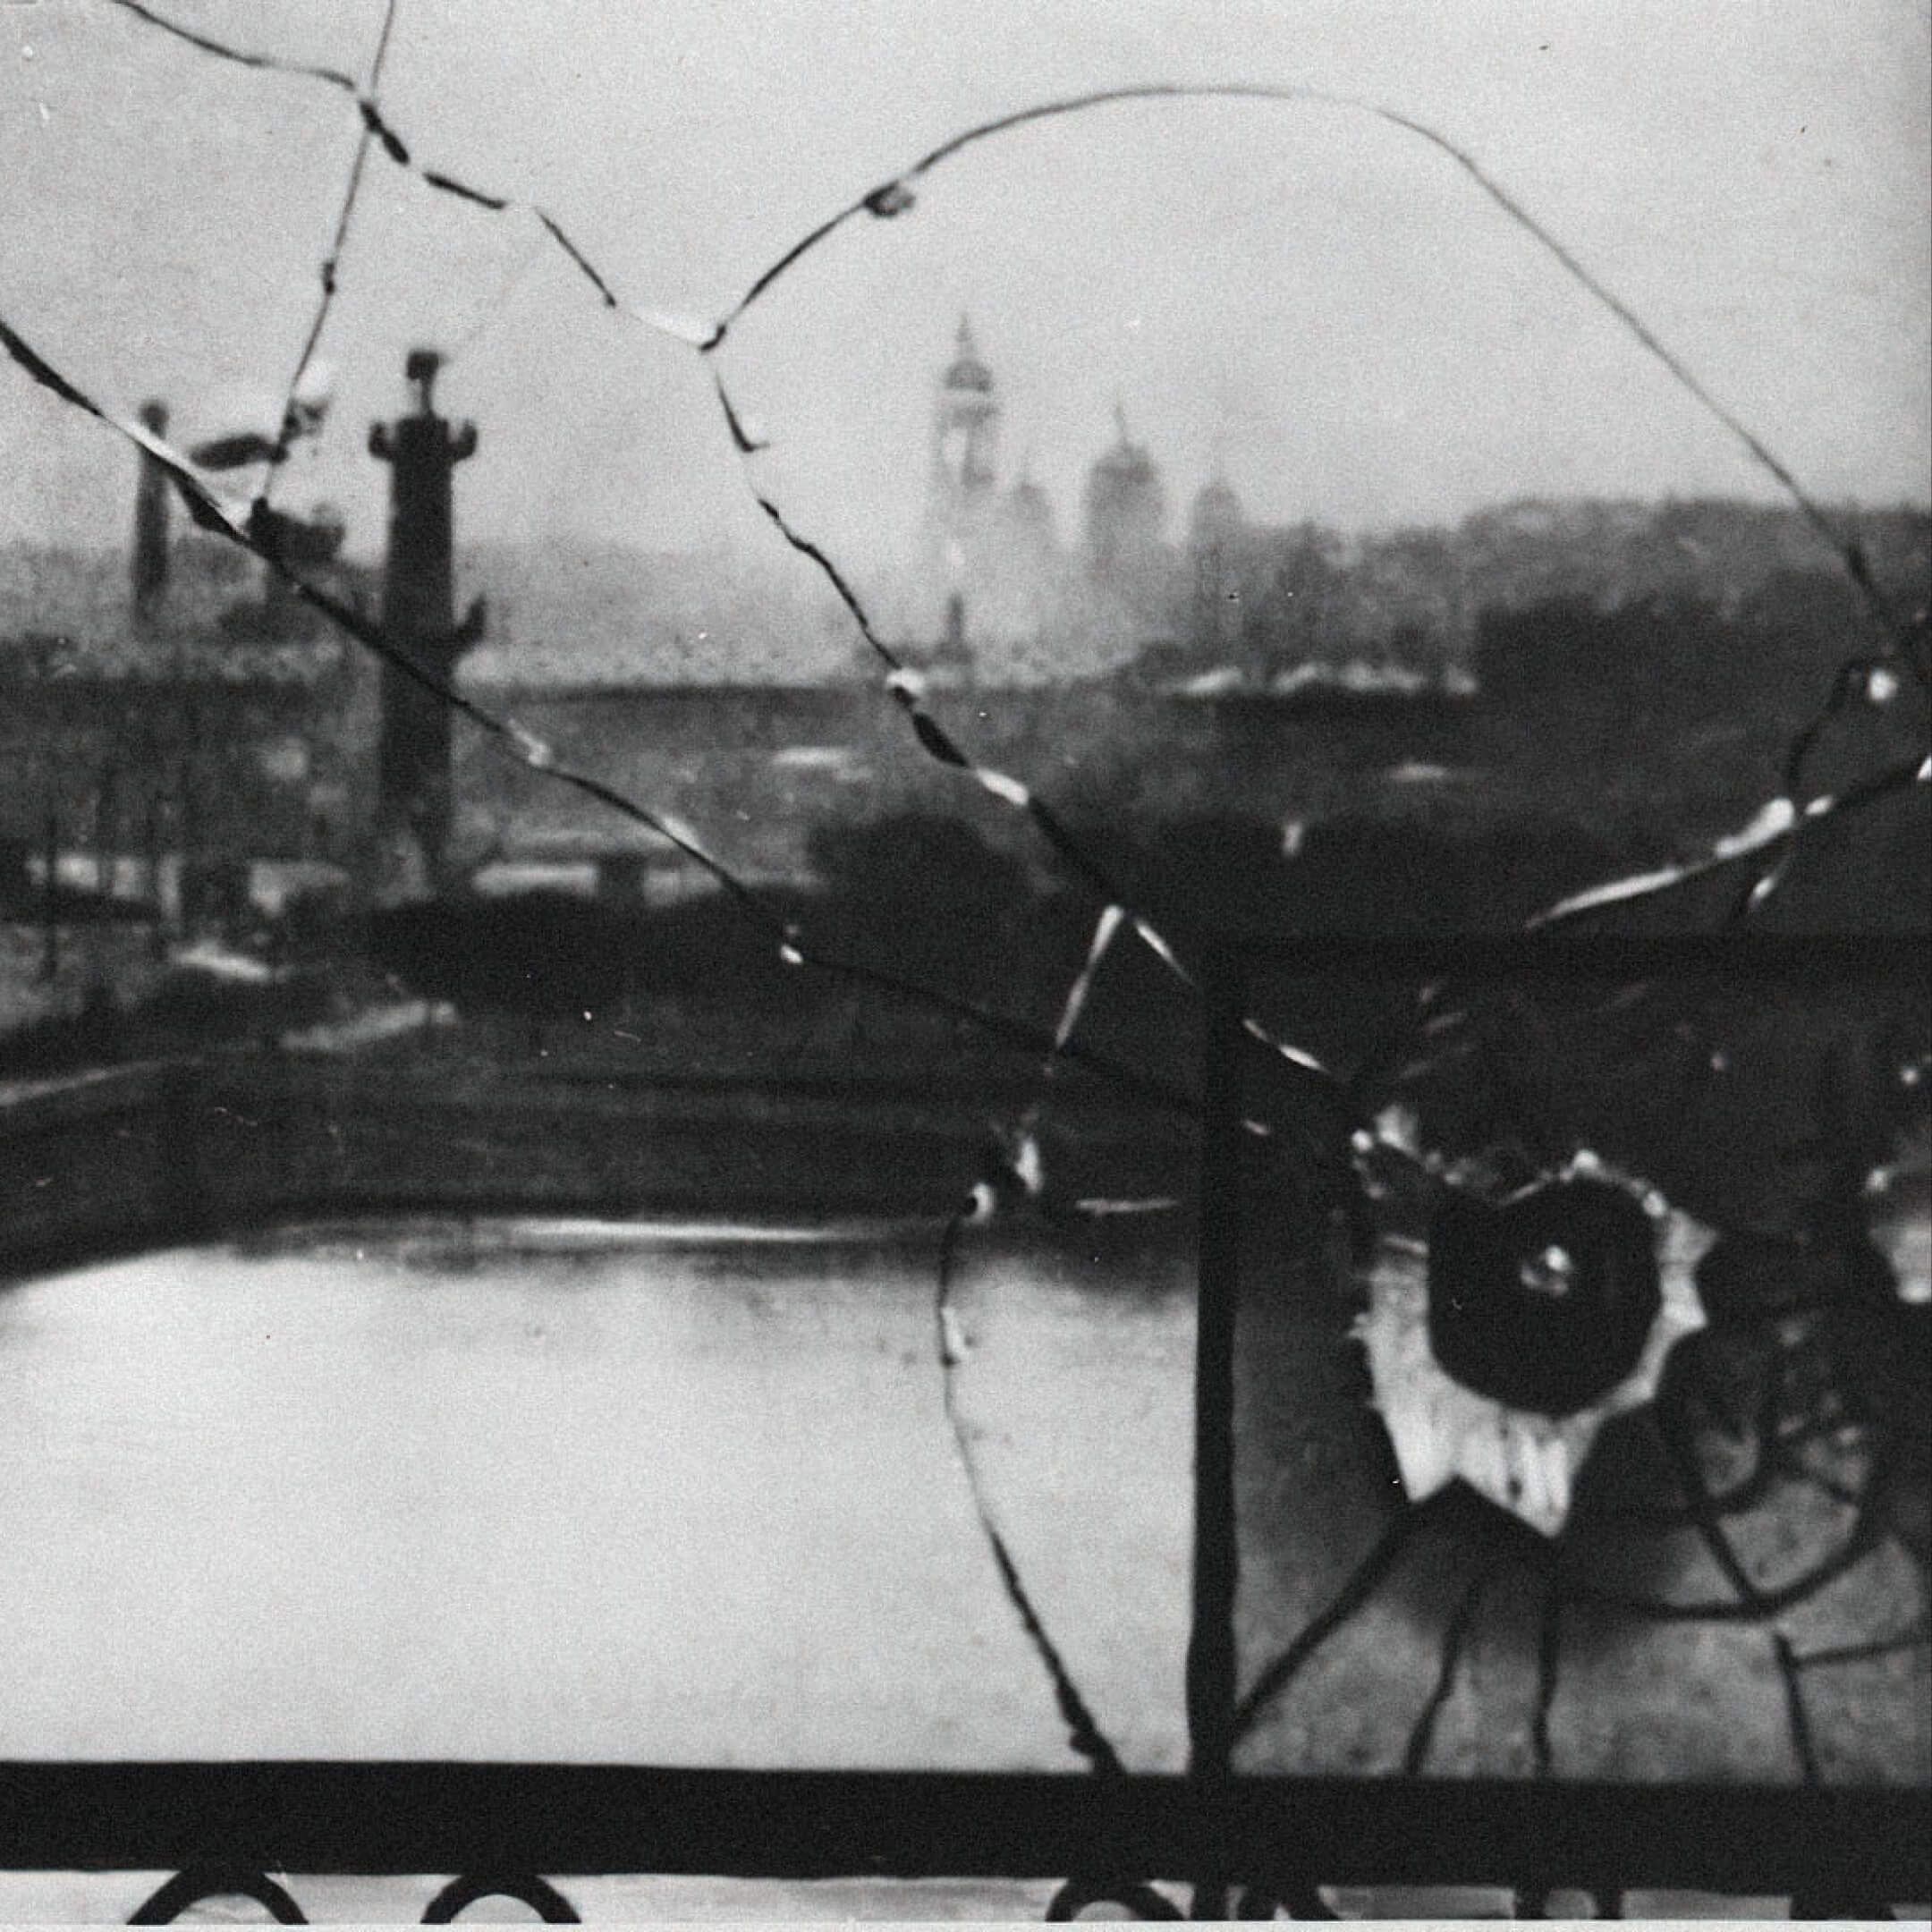 След от пули в окне Зимнего дворца, Санкт-Петербург, октябрь 1917. Фото: неизвестный автор, russiainphoto.ru